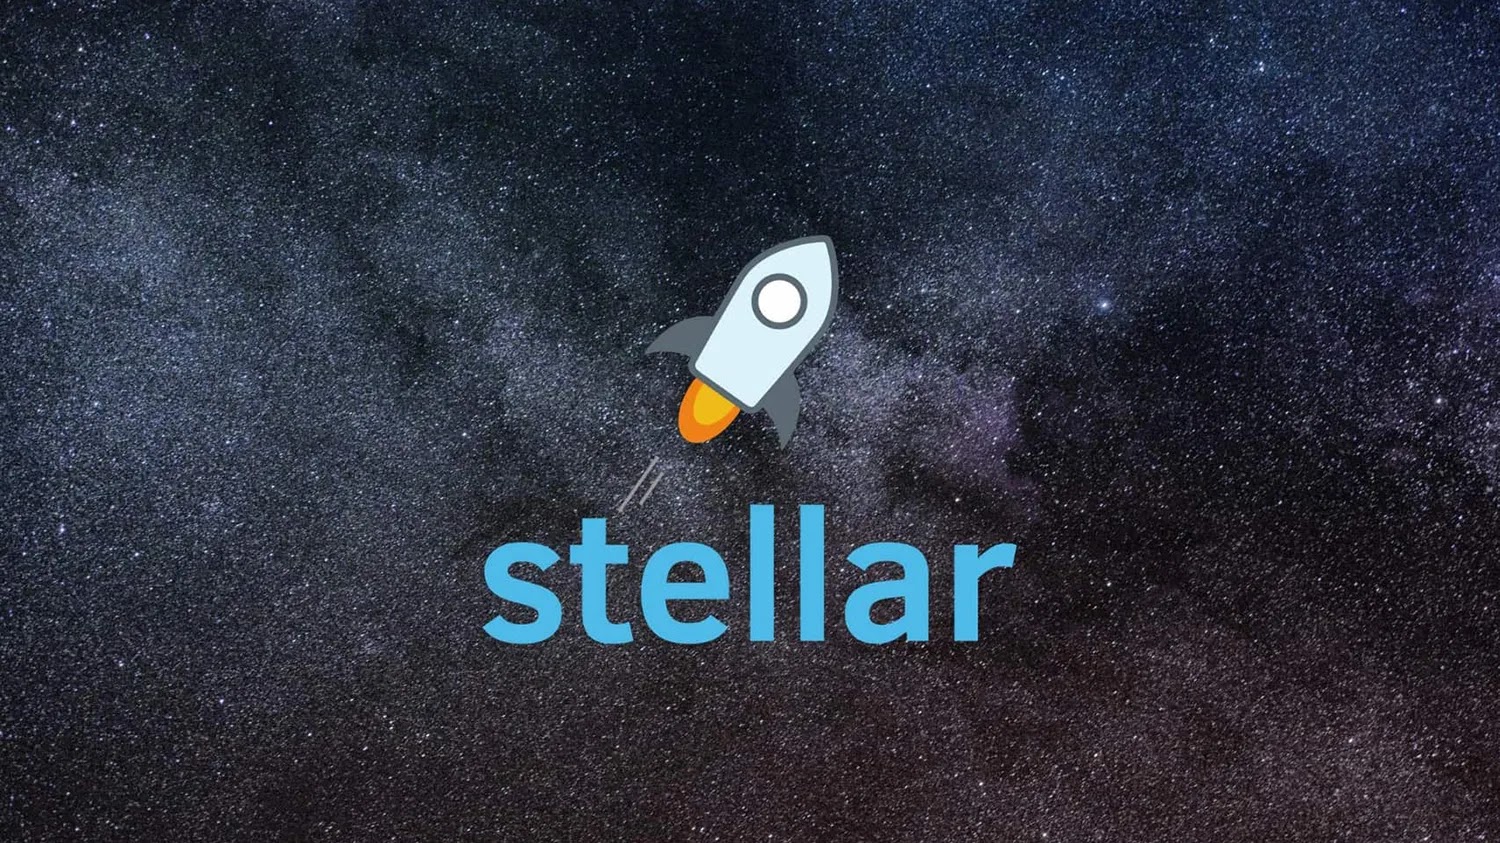 Kas Stellar Crypto on hea investeering?